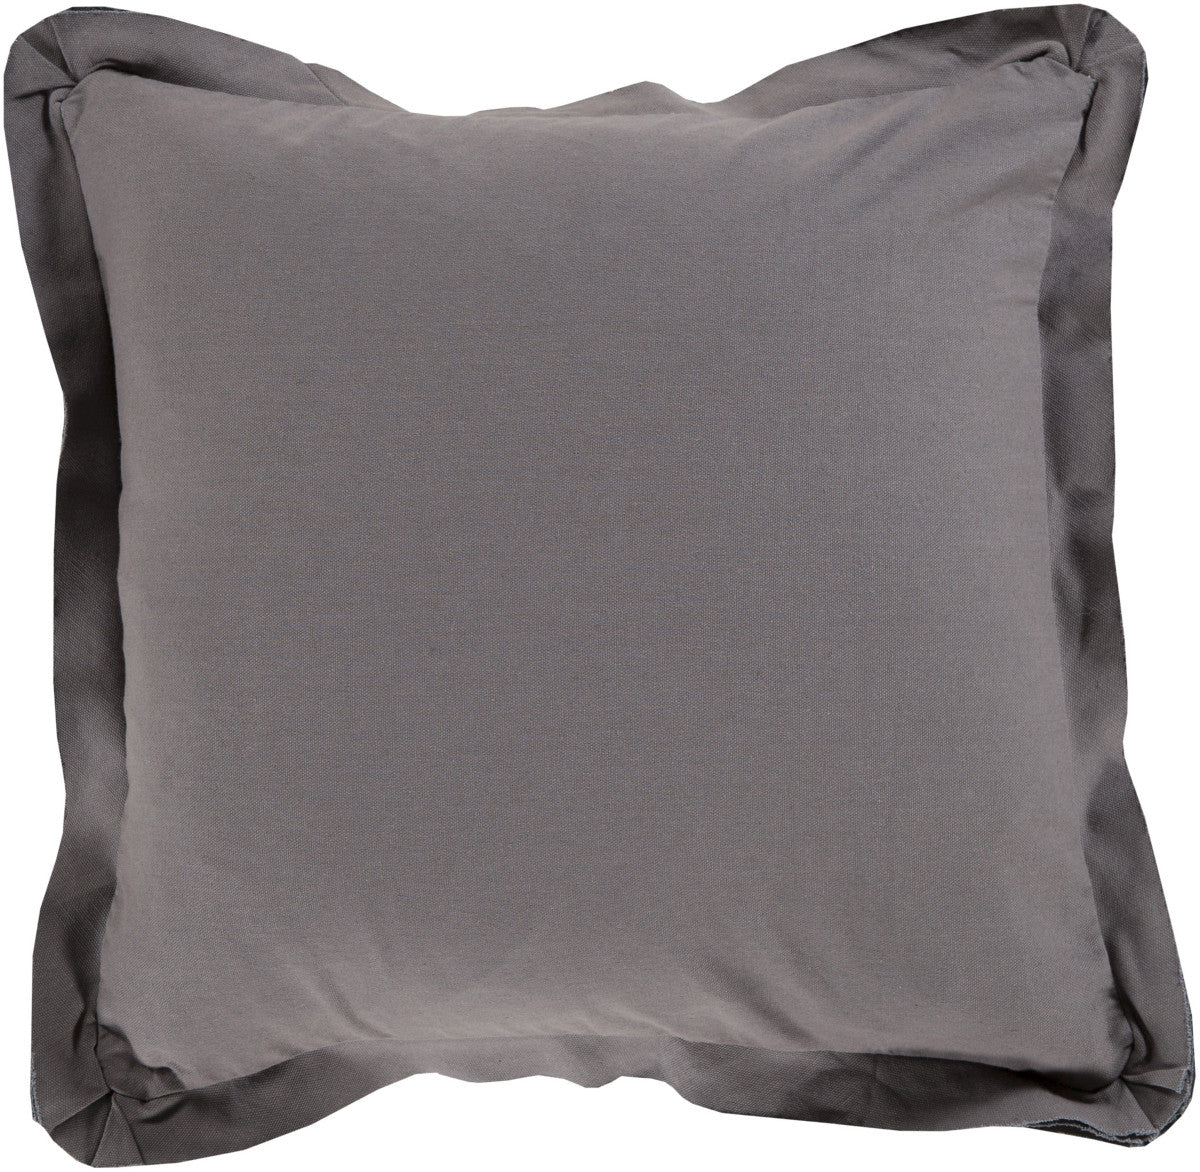 Surya Triple Flange Simple Sophistication TF-001 Pillow main image